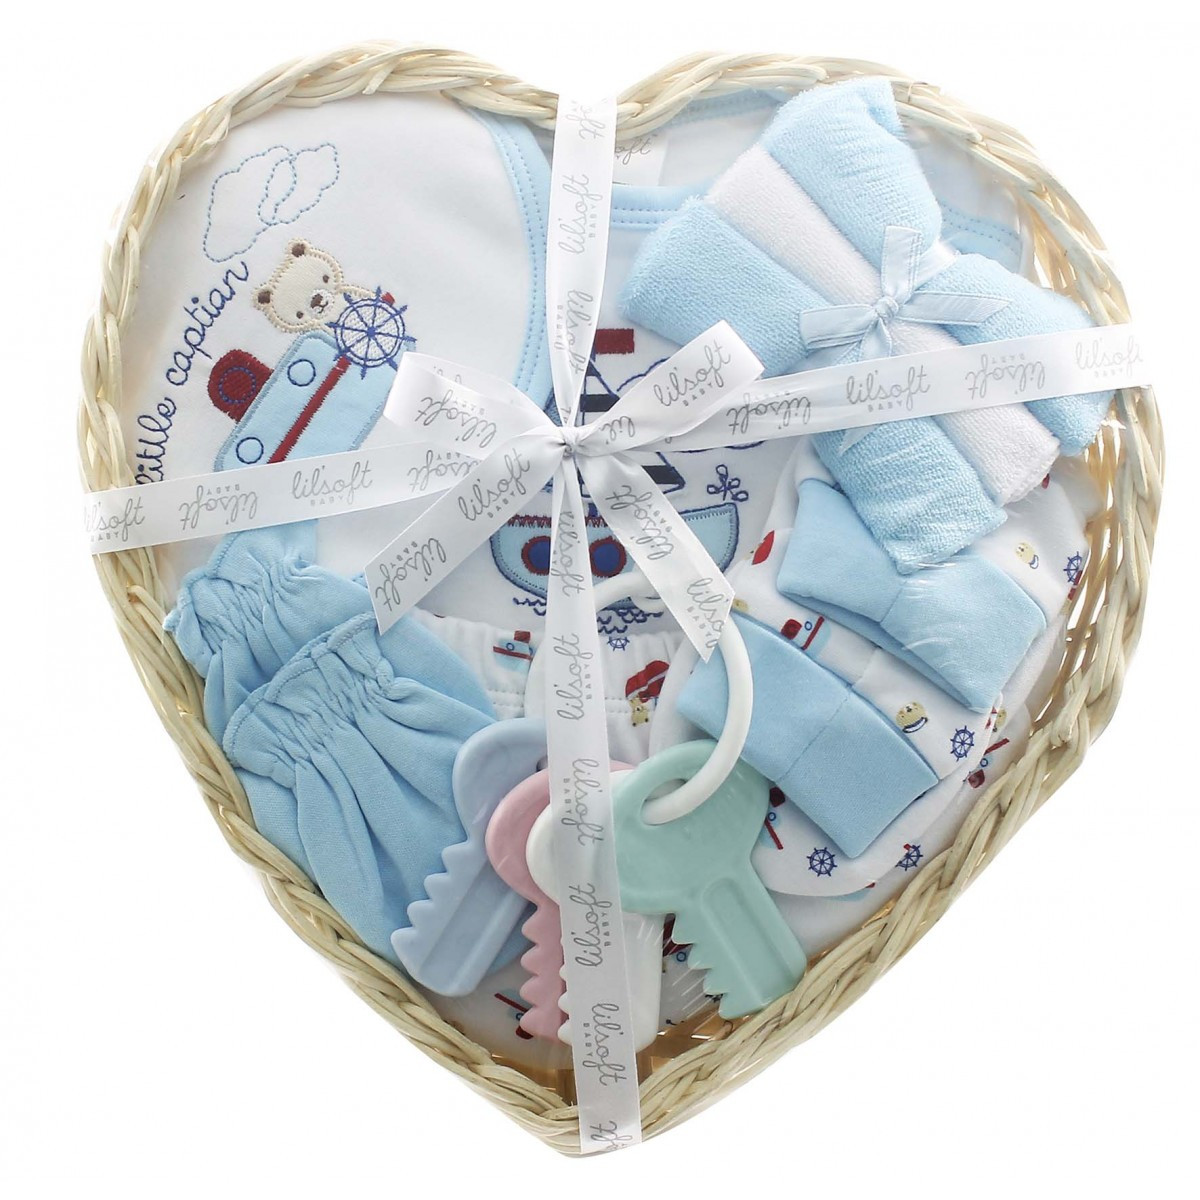 Baby Basket Gift Set
 10 PCS BABY GIFT SET หัวใจ for Lilsoft Baby